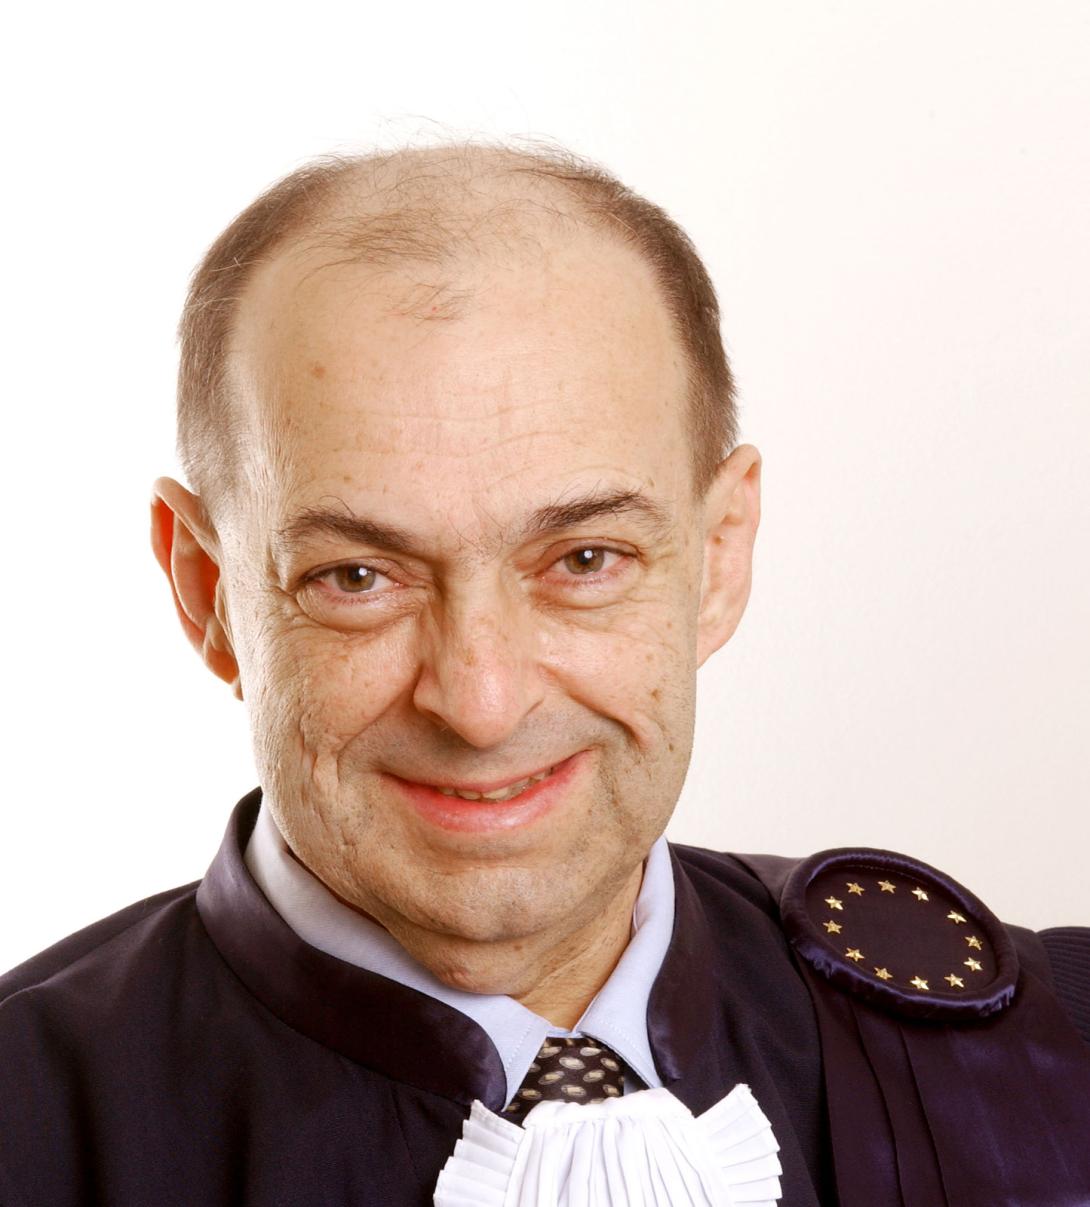 Judge Lech Garlicki